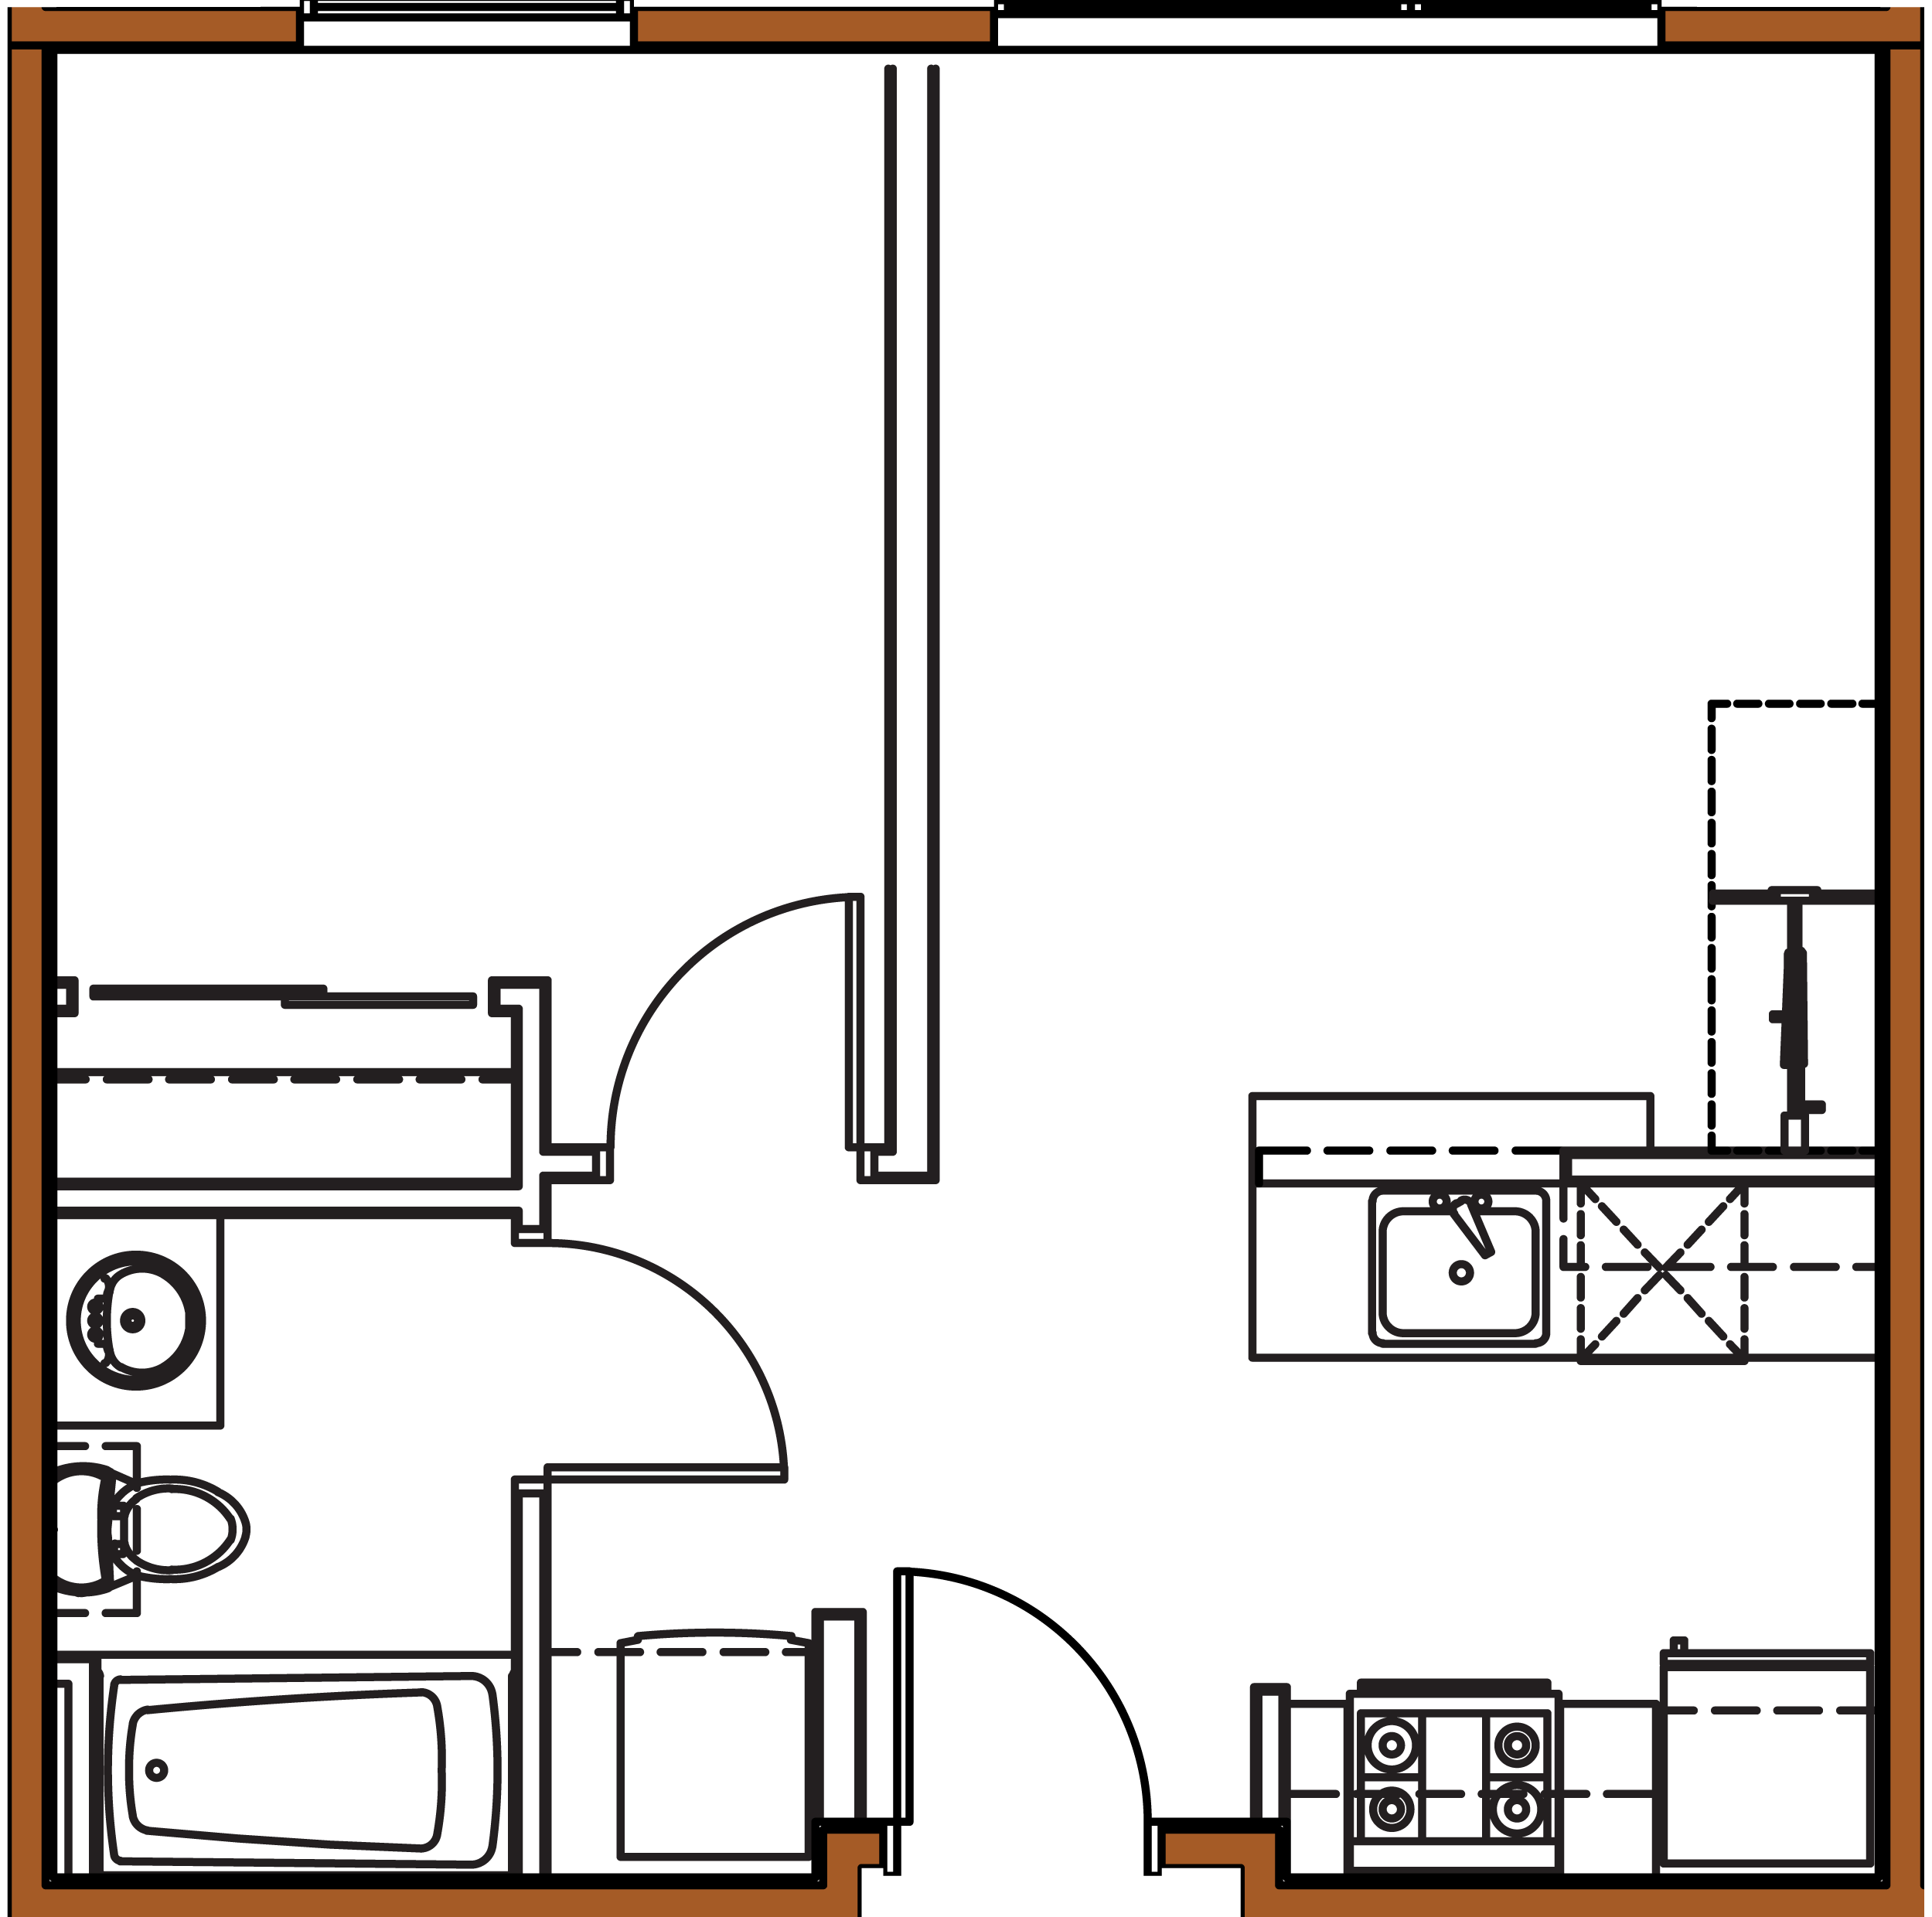 Ankeny Street, 1 bedroom, Island - Floorplan.png